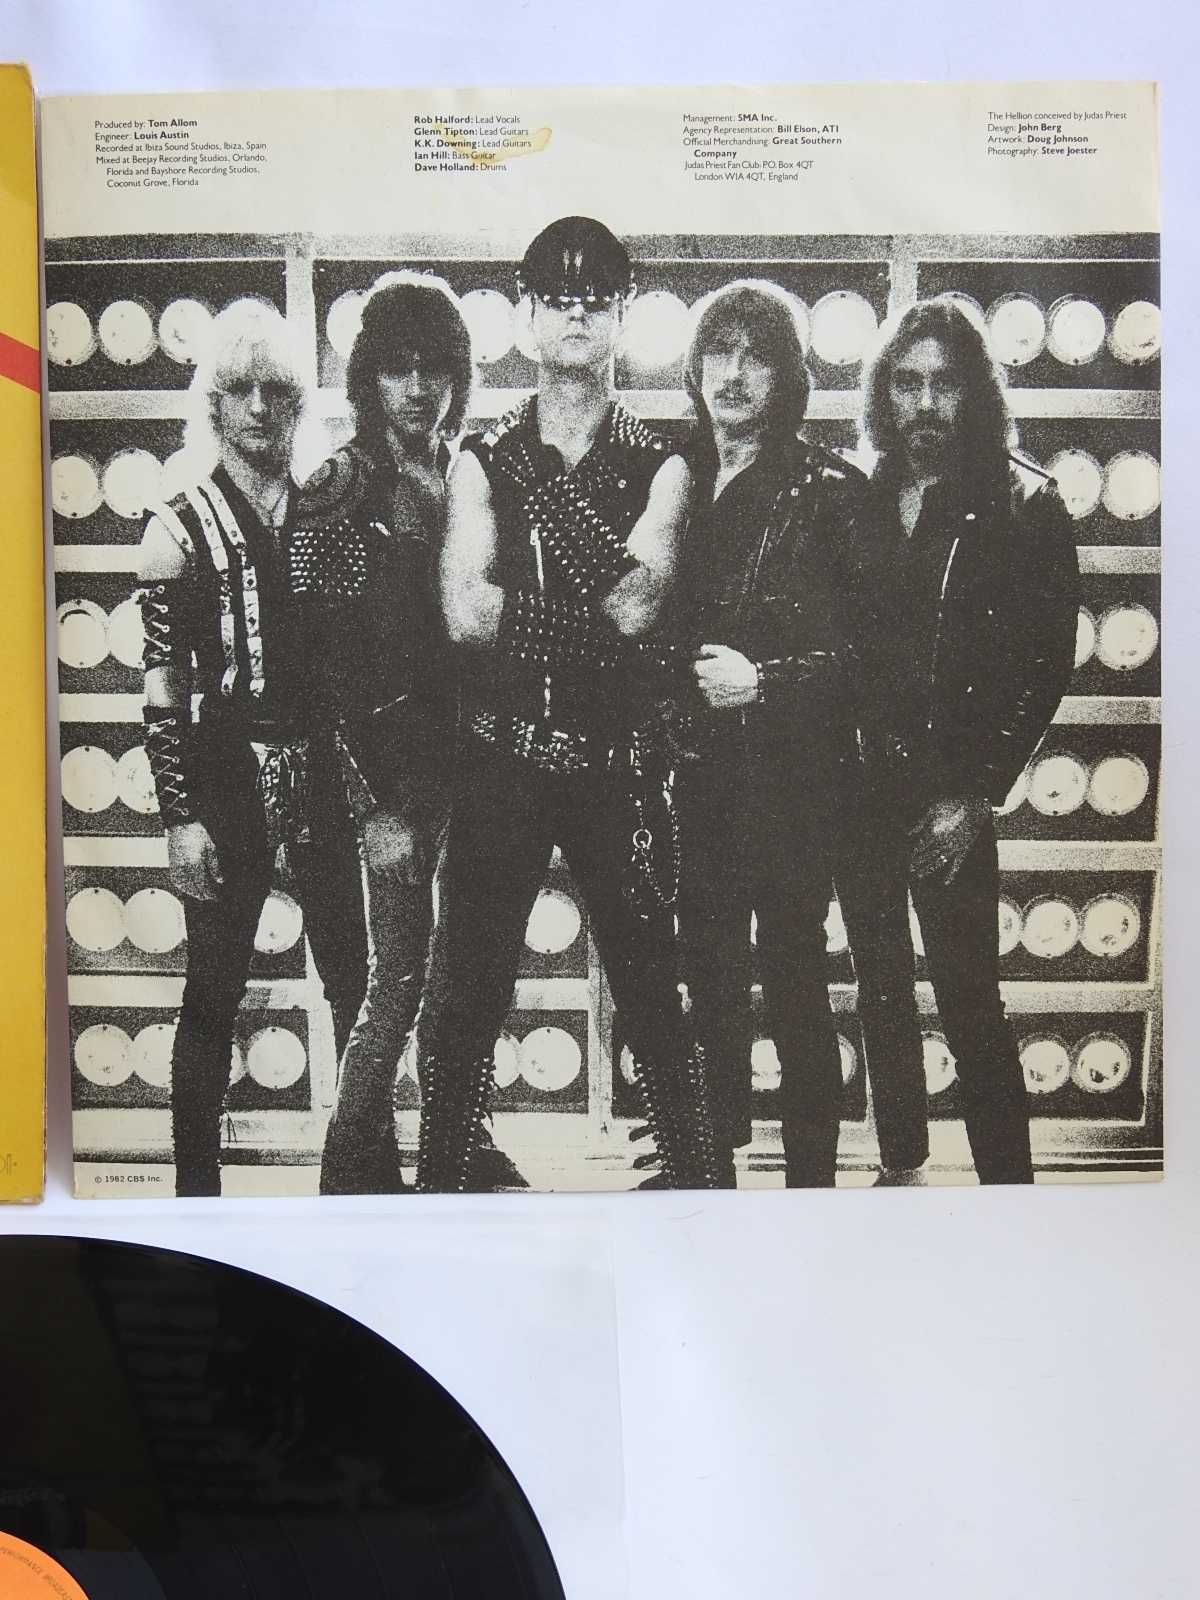 Judas Priest ‎Screaming For Vengeance LP UK пластинка Британия 1982 EX